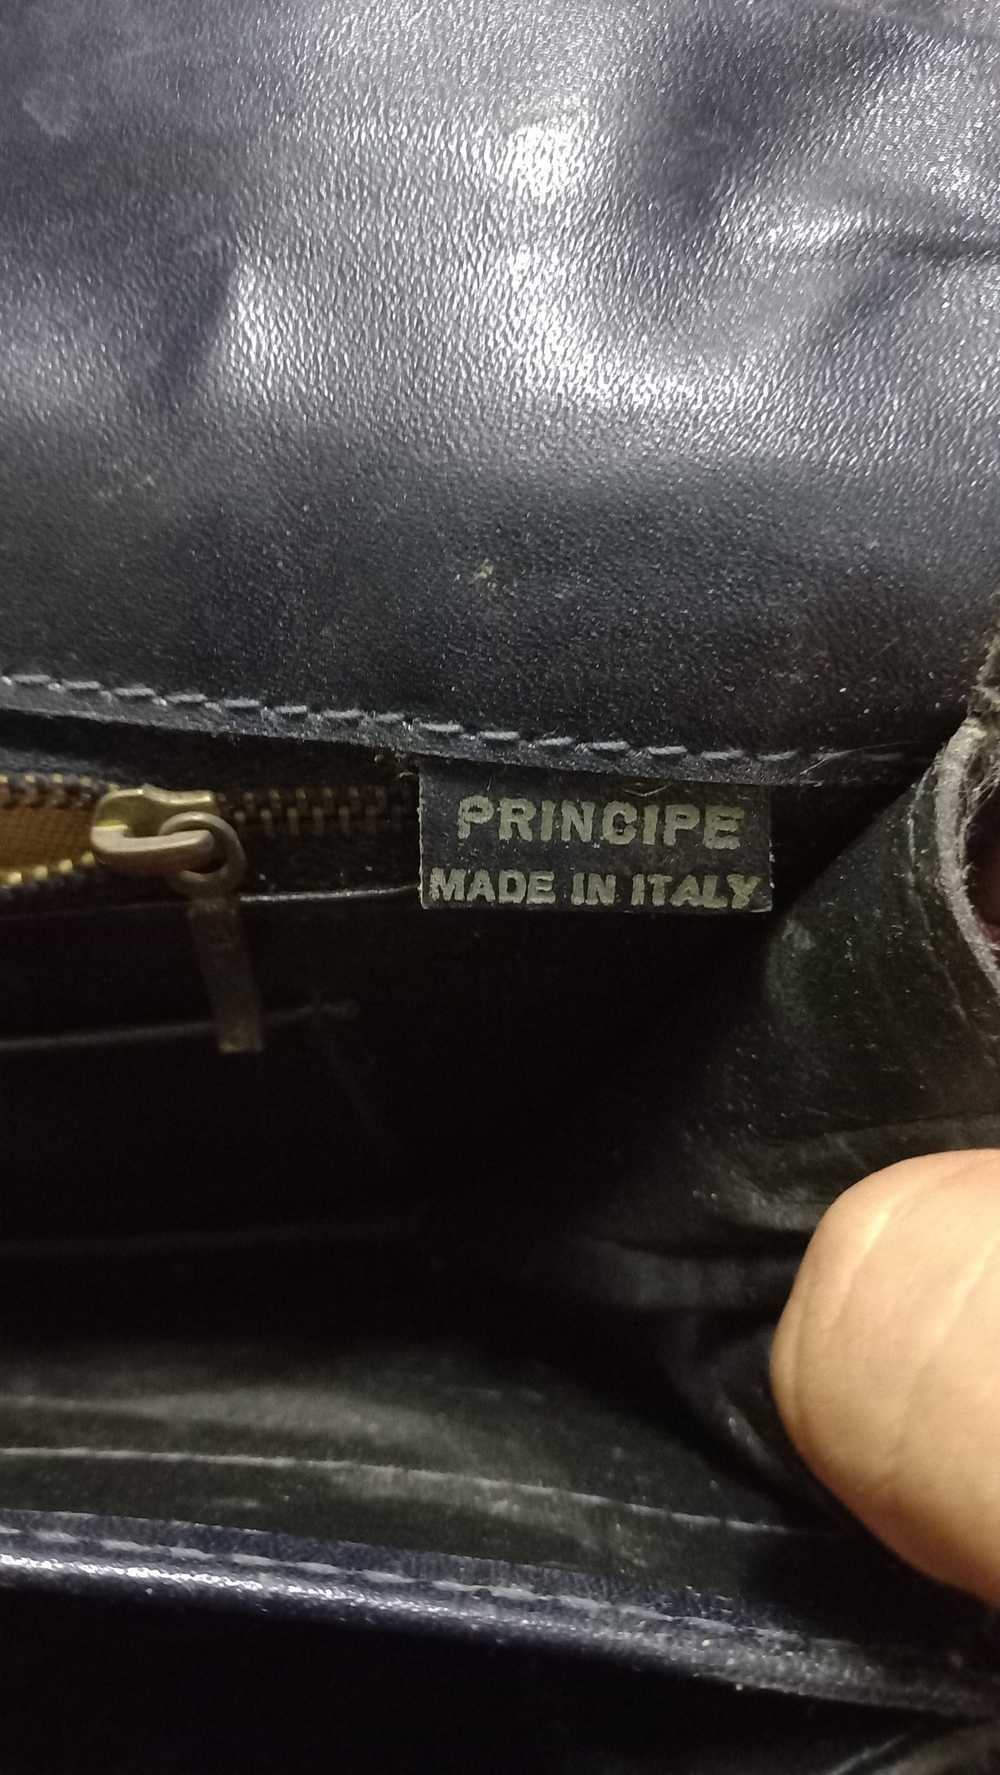 Principe Principe leather sling bag - image 5